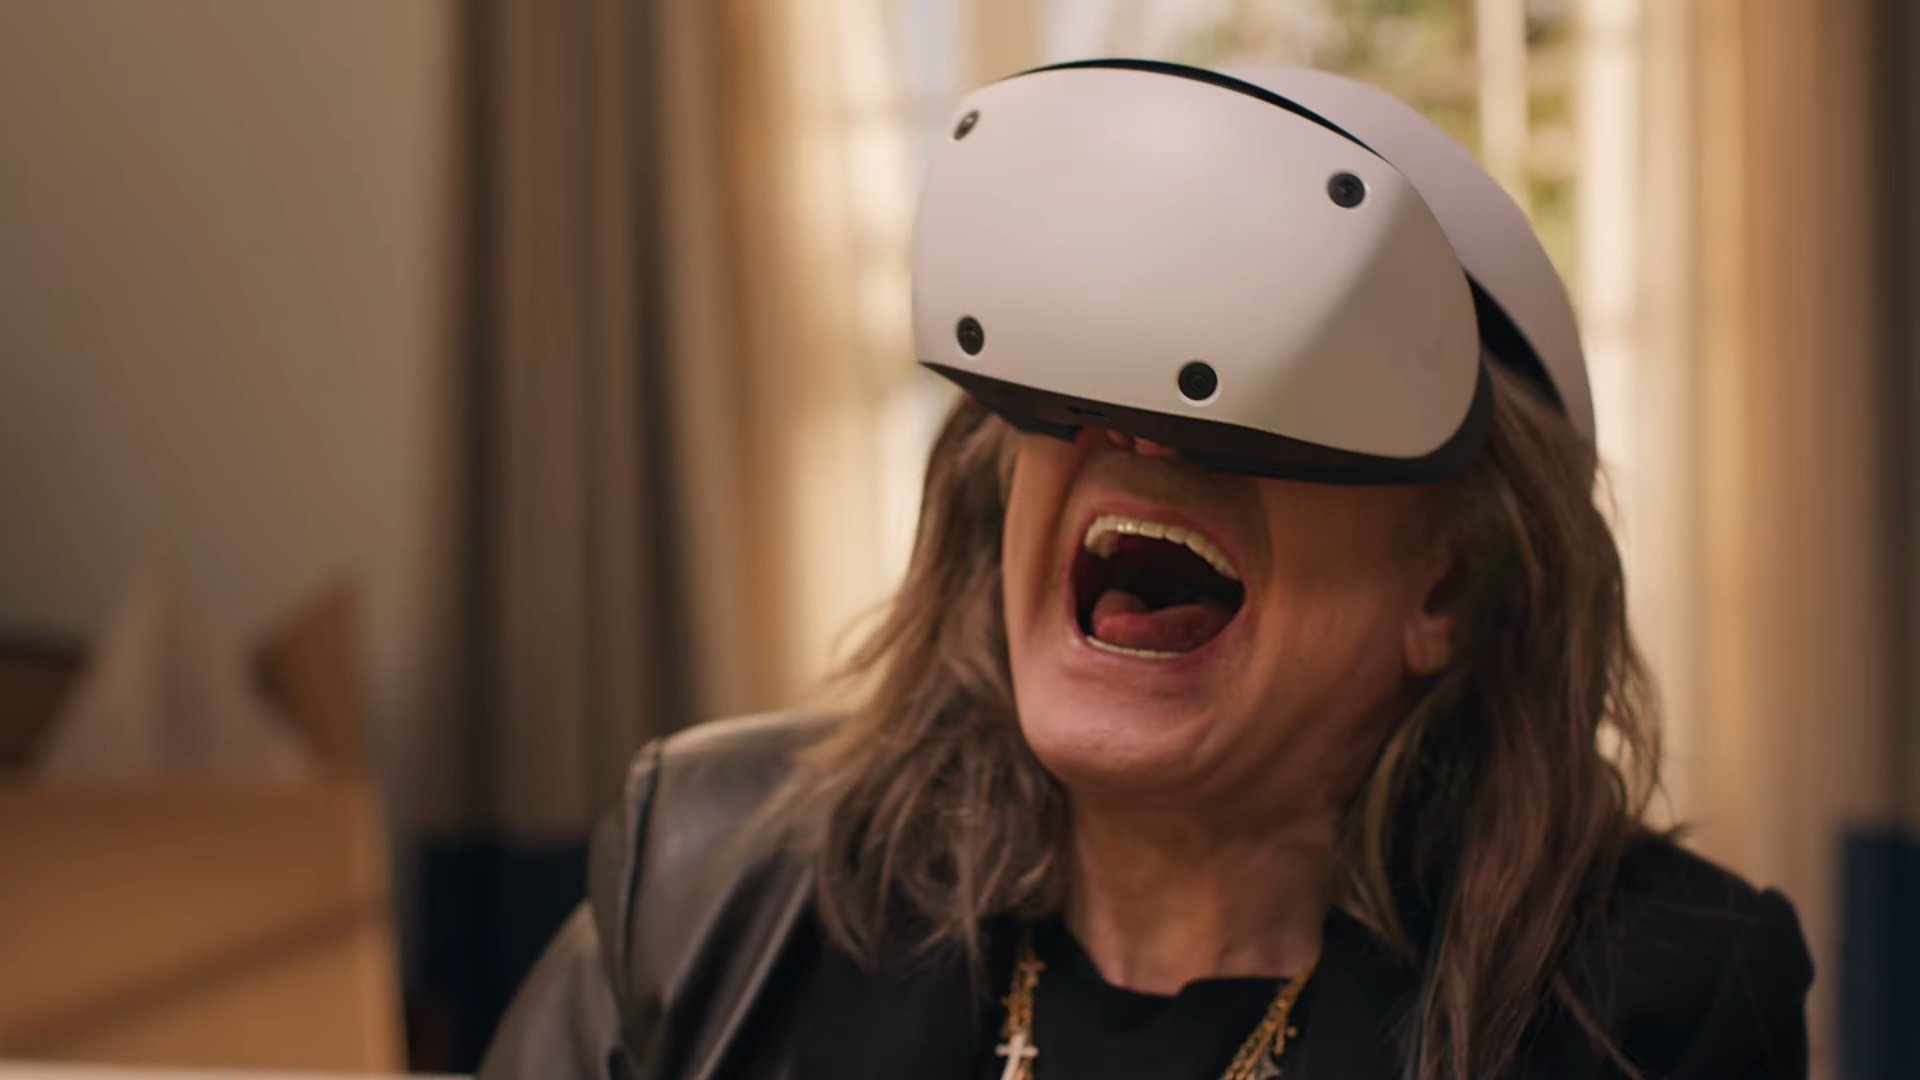 Ozzy Osbourne PlayStation VR 2 ad